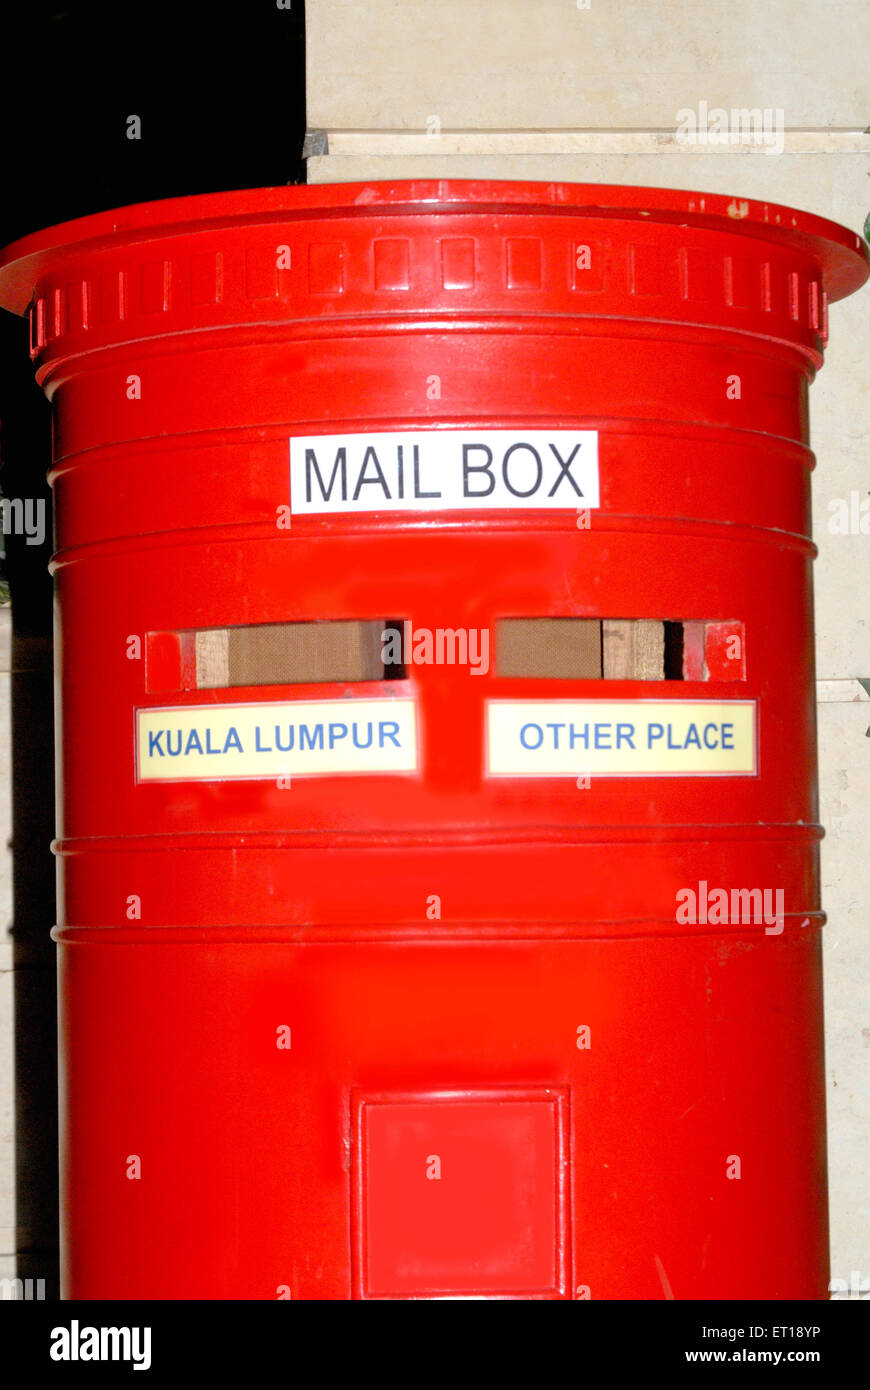 Red mail box, letterbox, letter box, mail box, mailbox, postbox, post box, dropbox, drop box, collection box, Kuala Lumpur, Malaysia Stock Photo